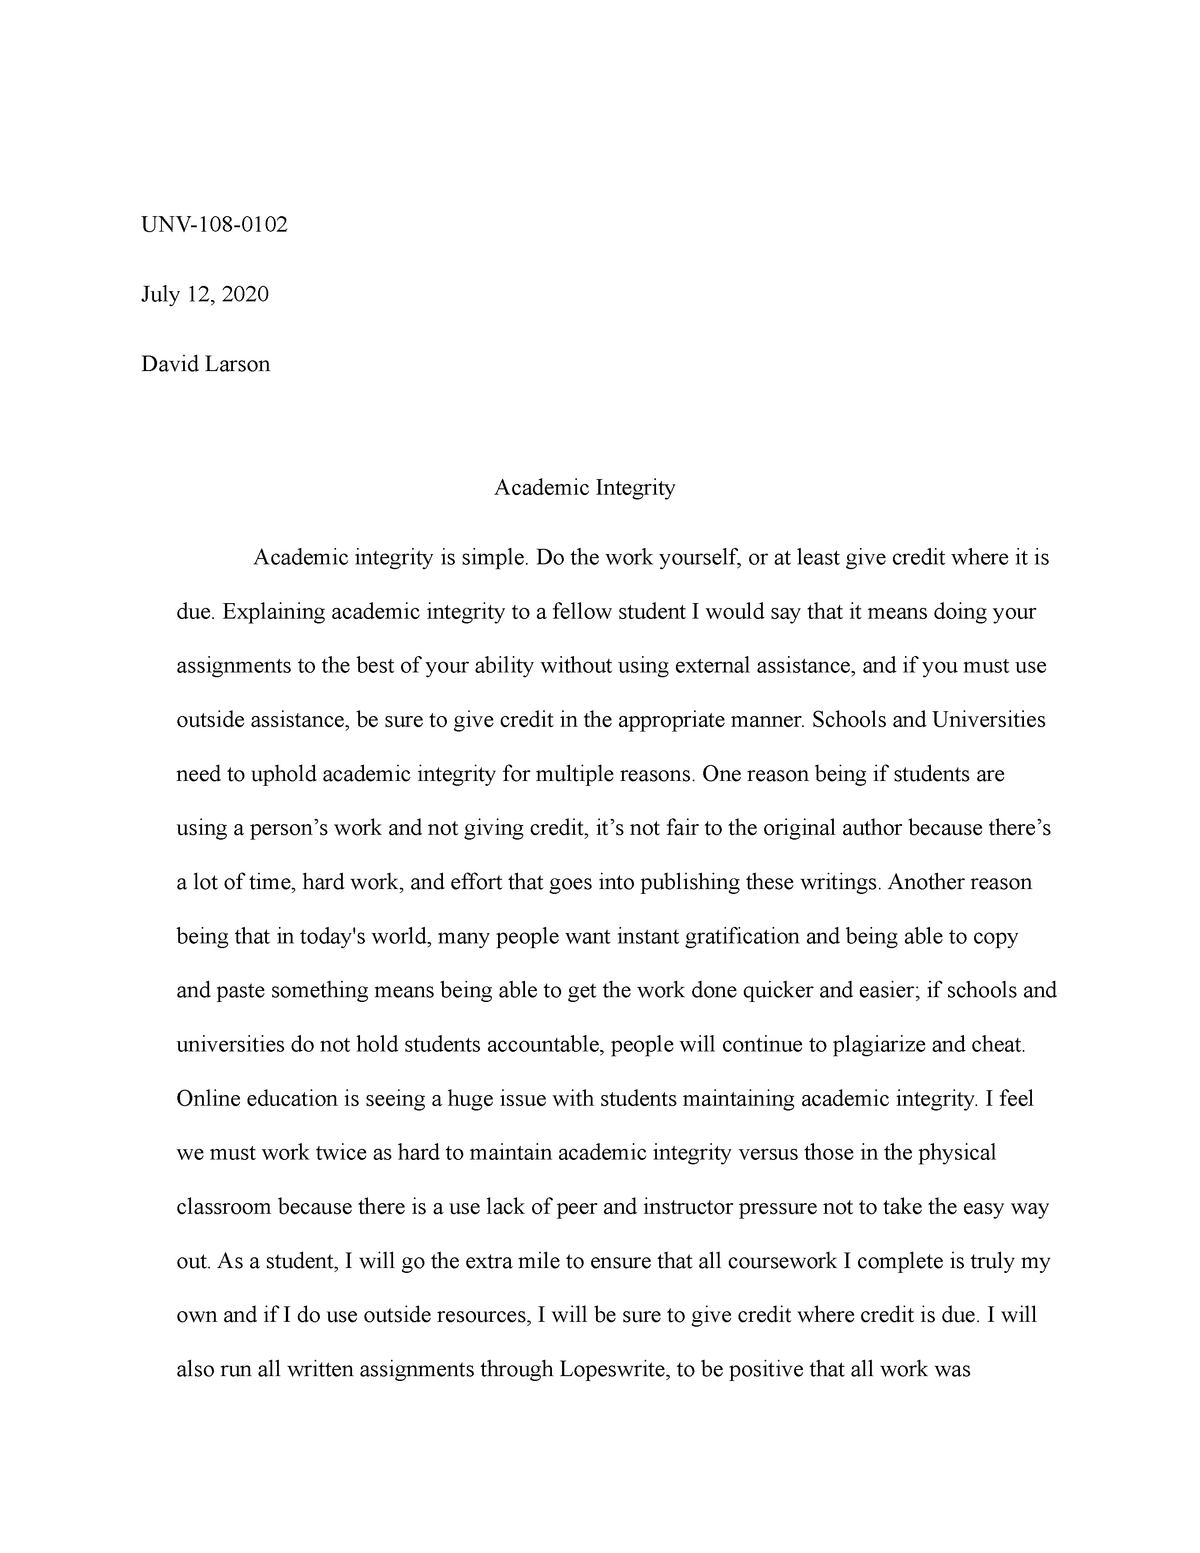 academic integrity essay example